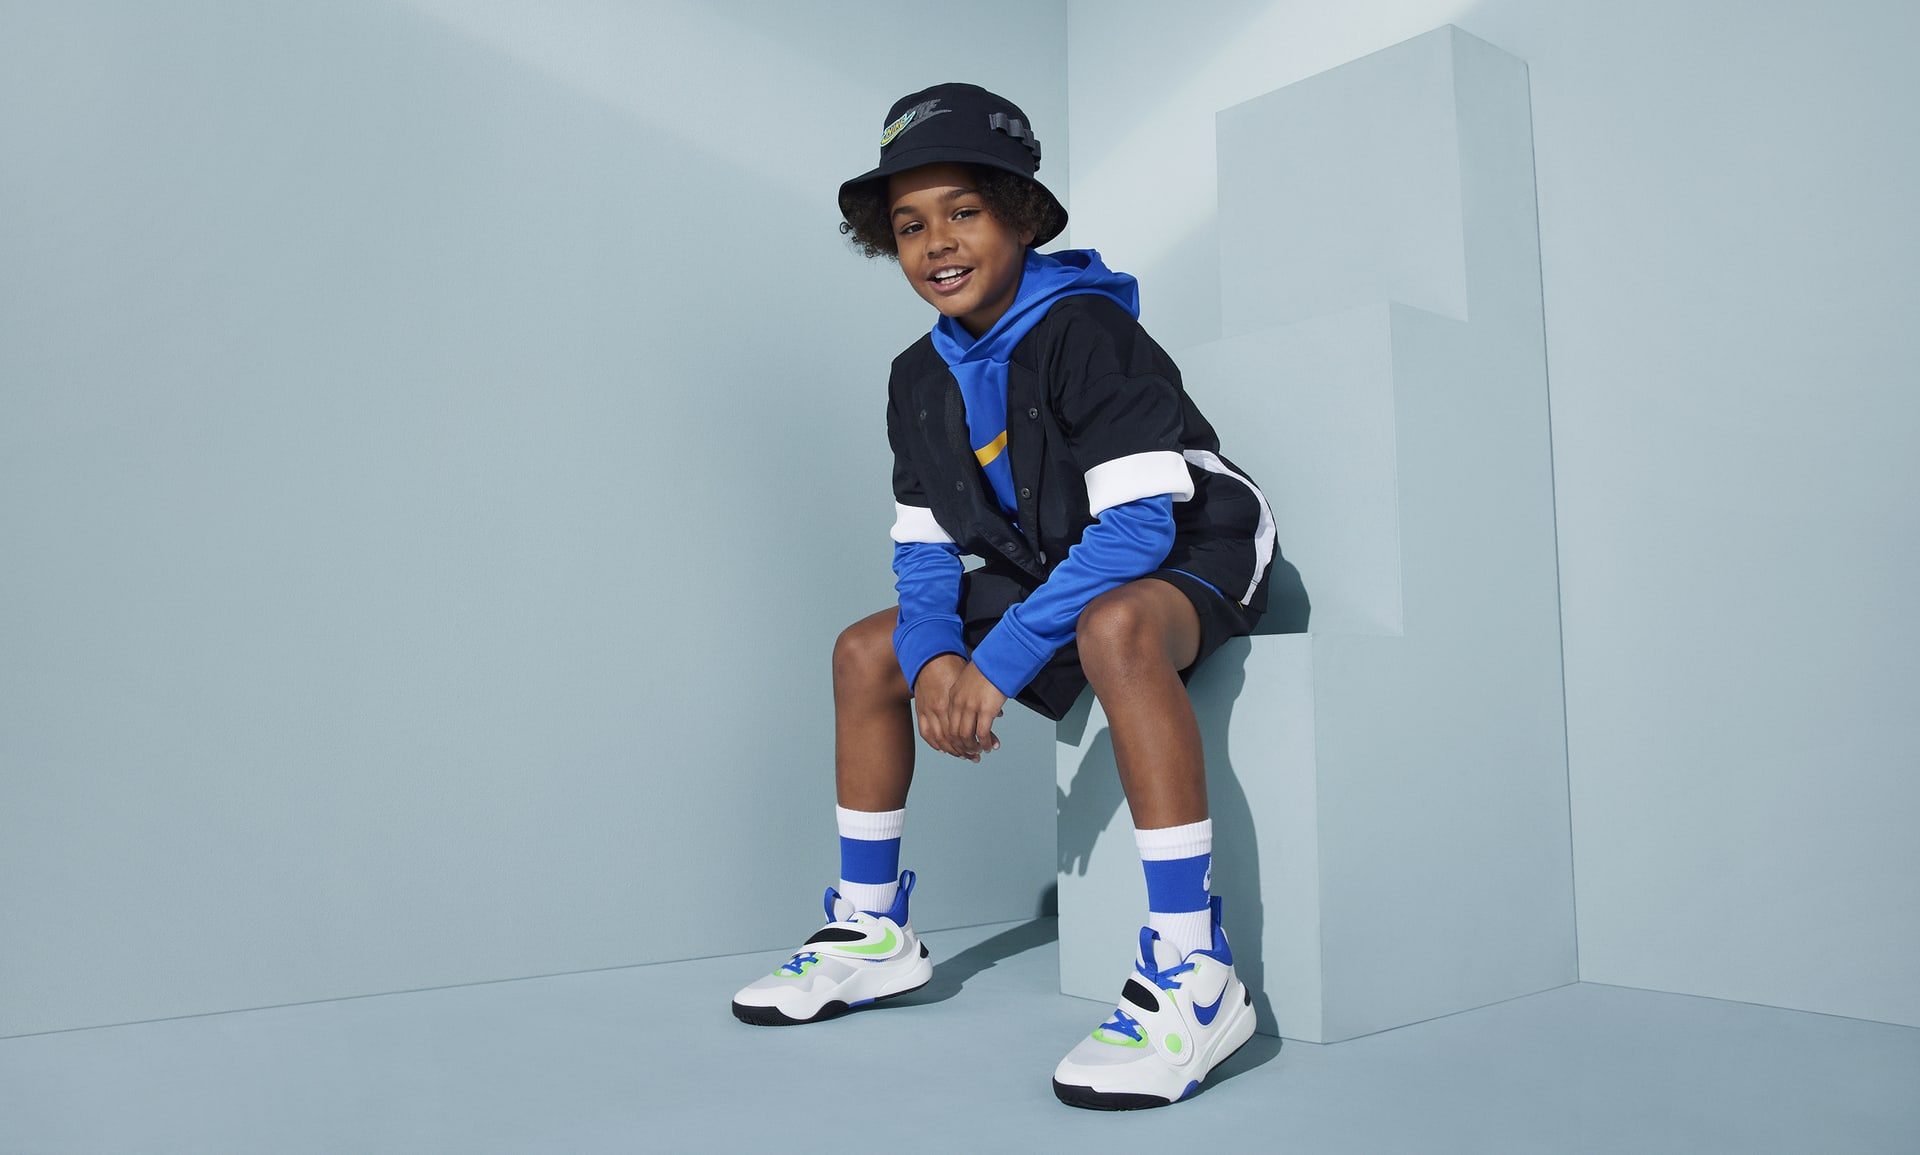 Nike Apex Kids' Maker Moves Bucket Hat. Nike ID